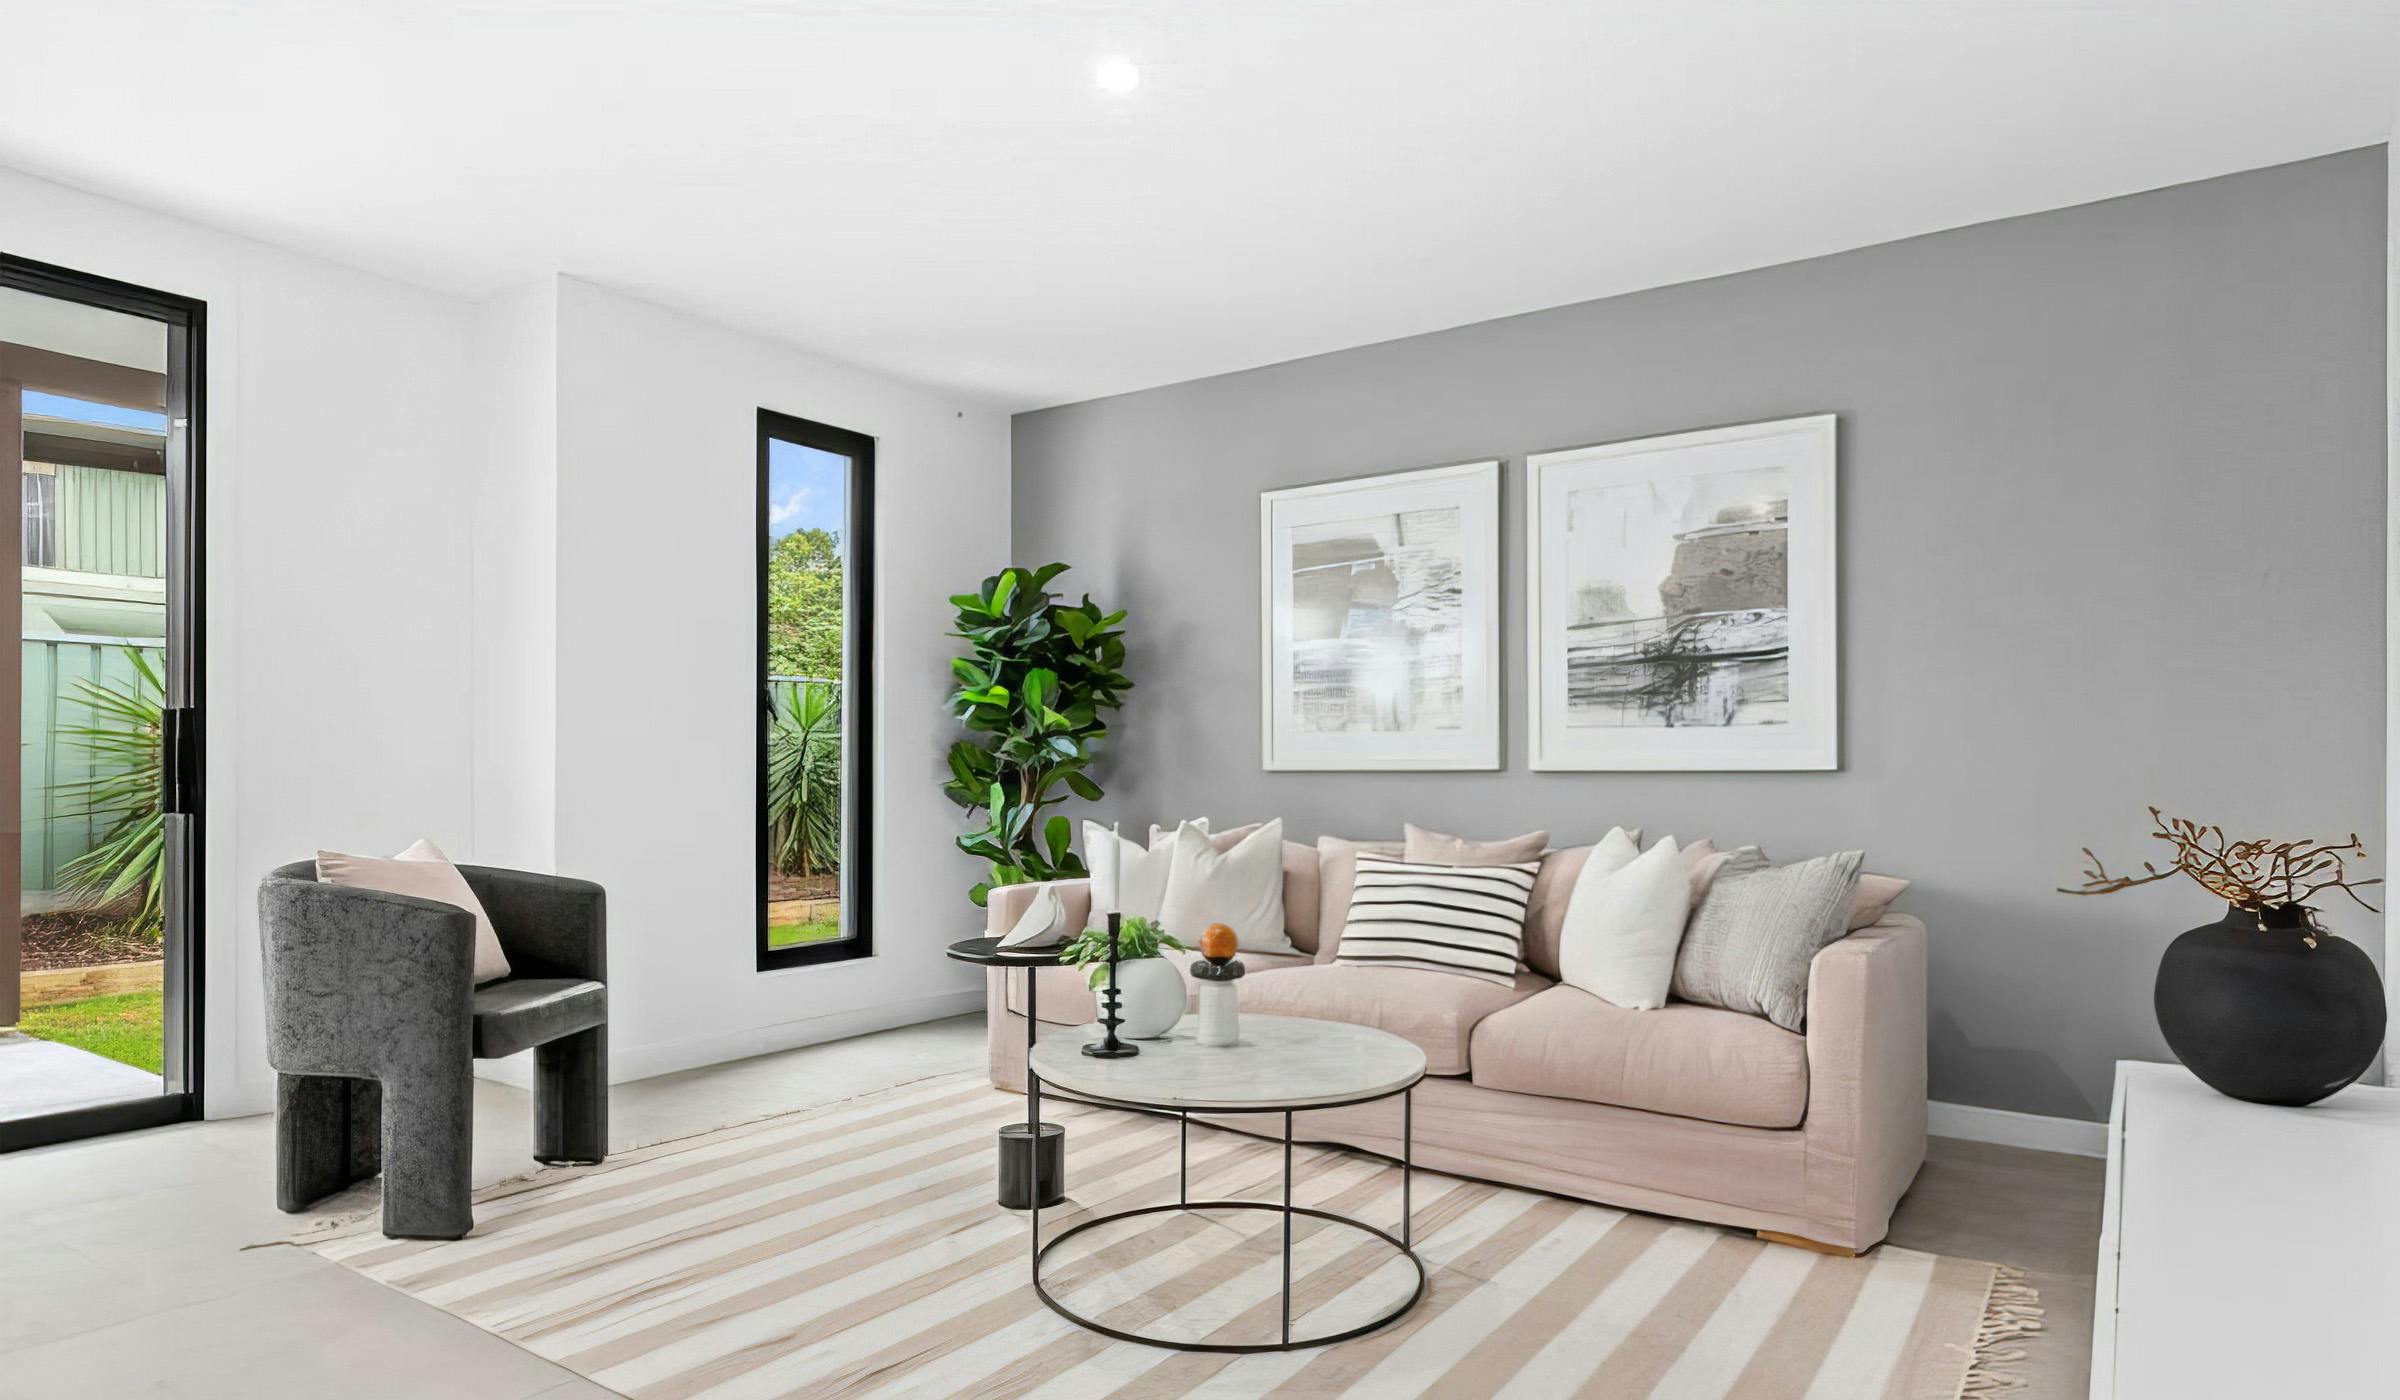 Well-lit simple living room